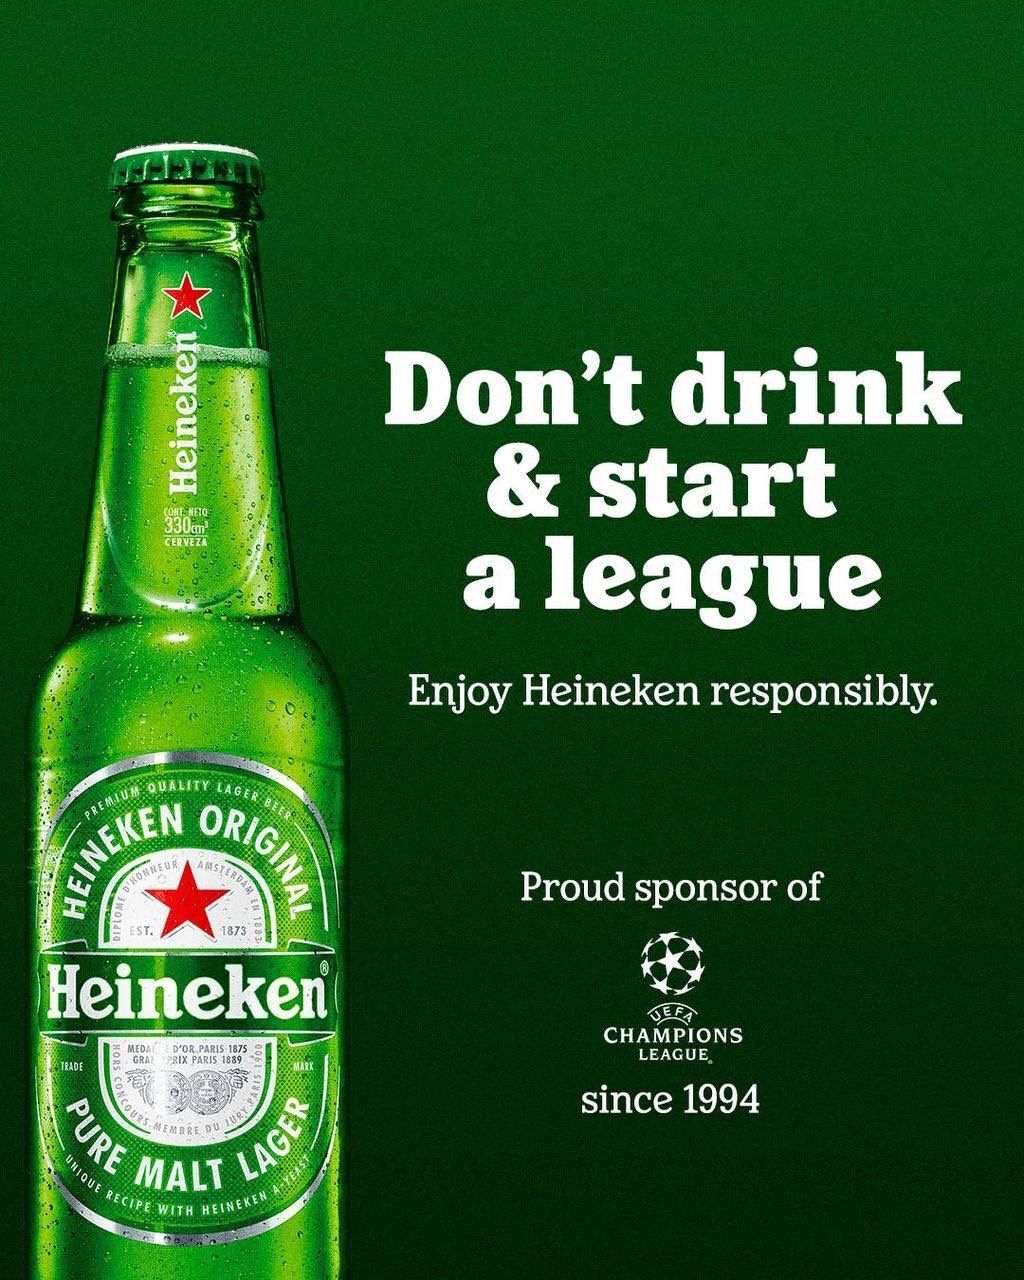 Heineken Super league inhaker